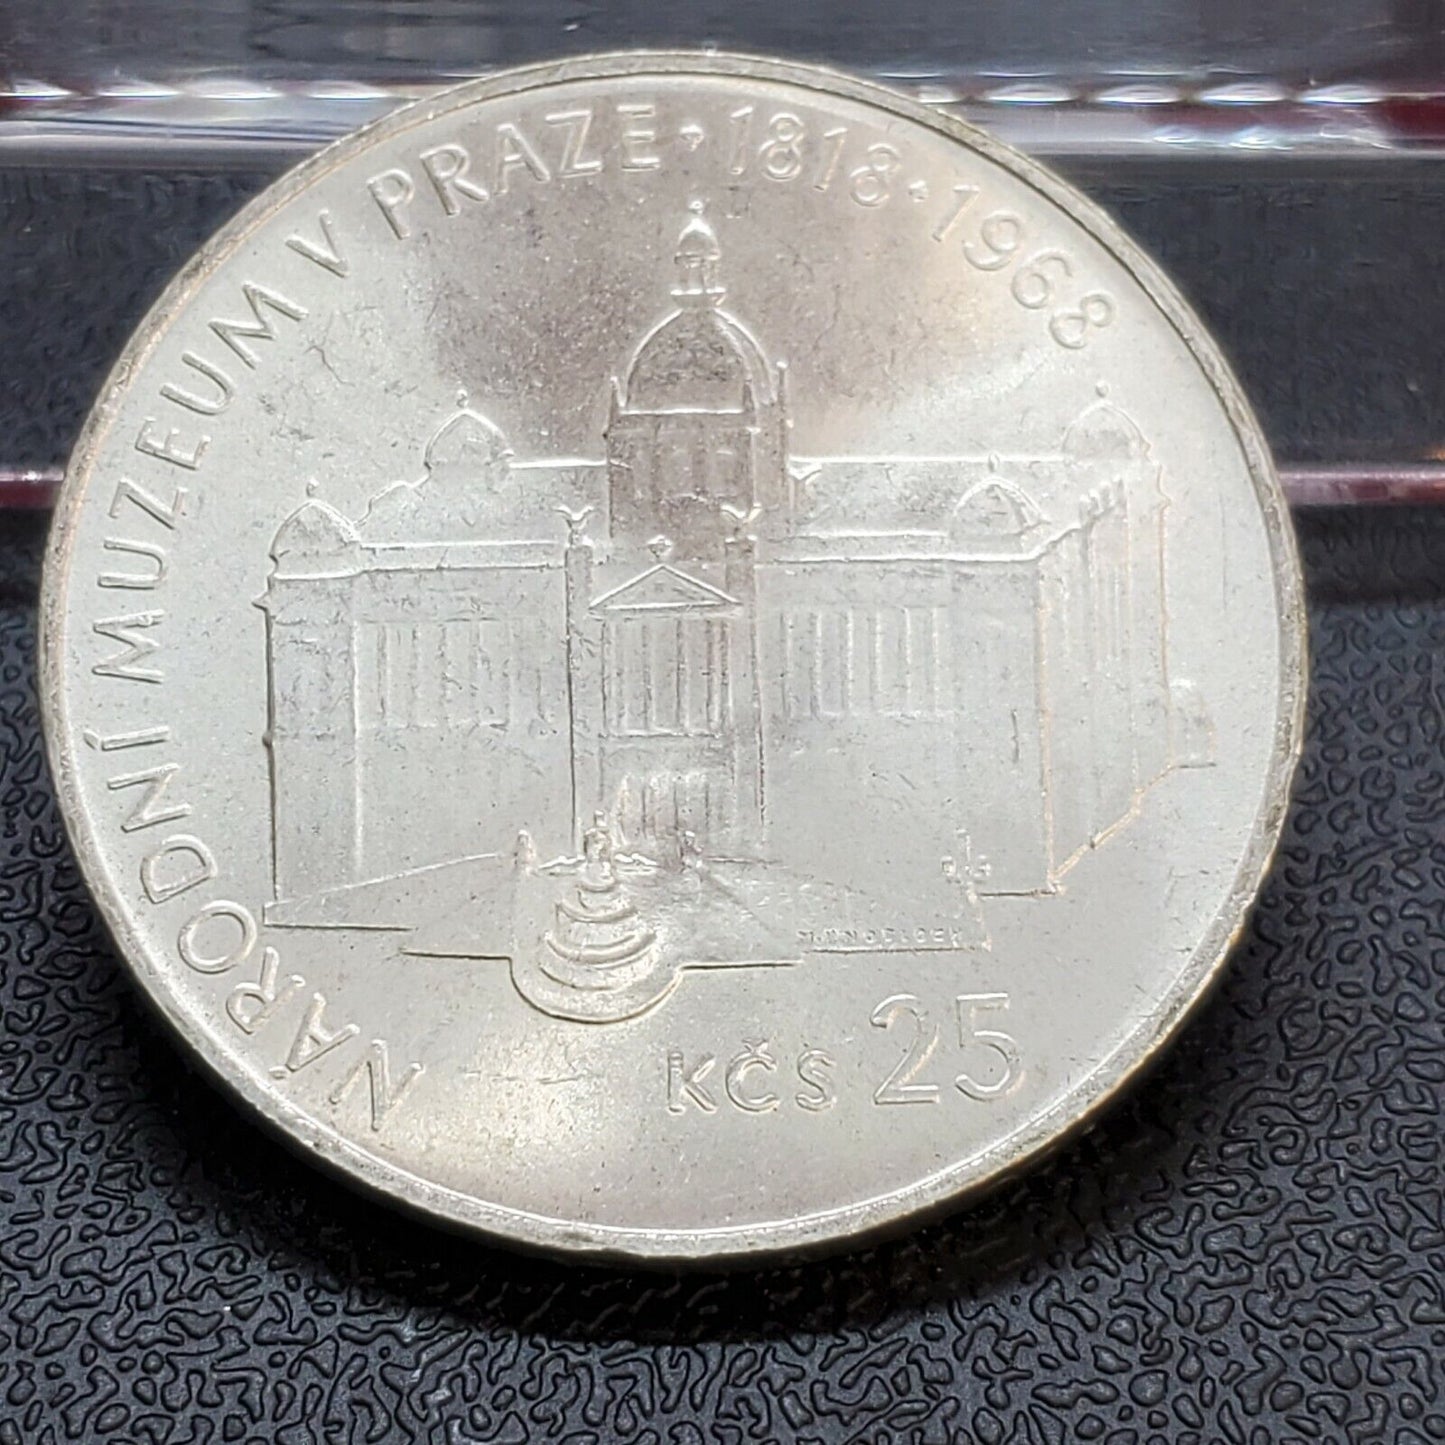 1968 Czechoslovakia 25 Korun NATIONAL MUSEUM IN PRAGUE Silver GEM BU Coin KM-64